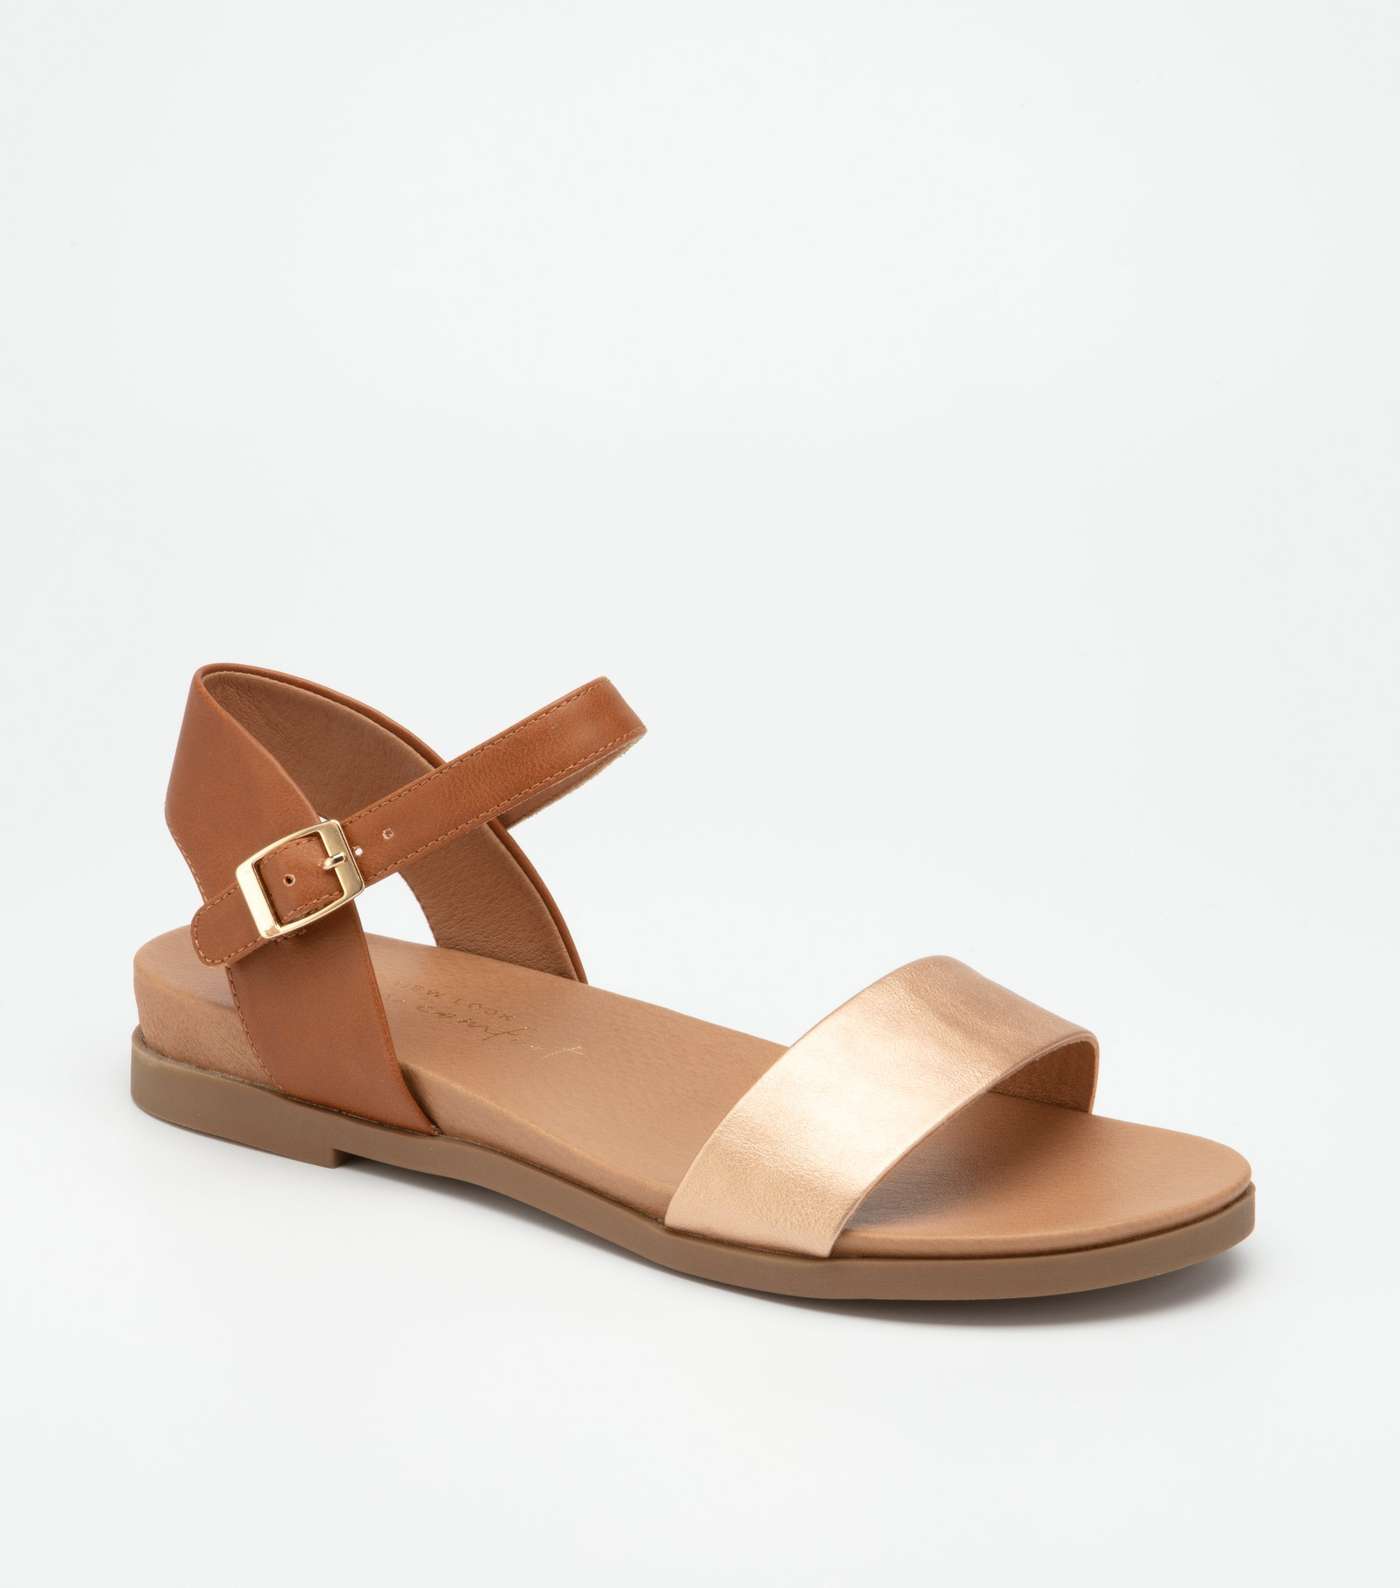 Tan Leather-Look Metallic Footbed Sandals